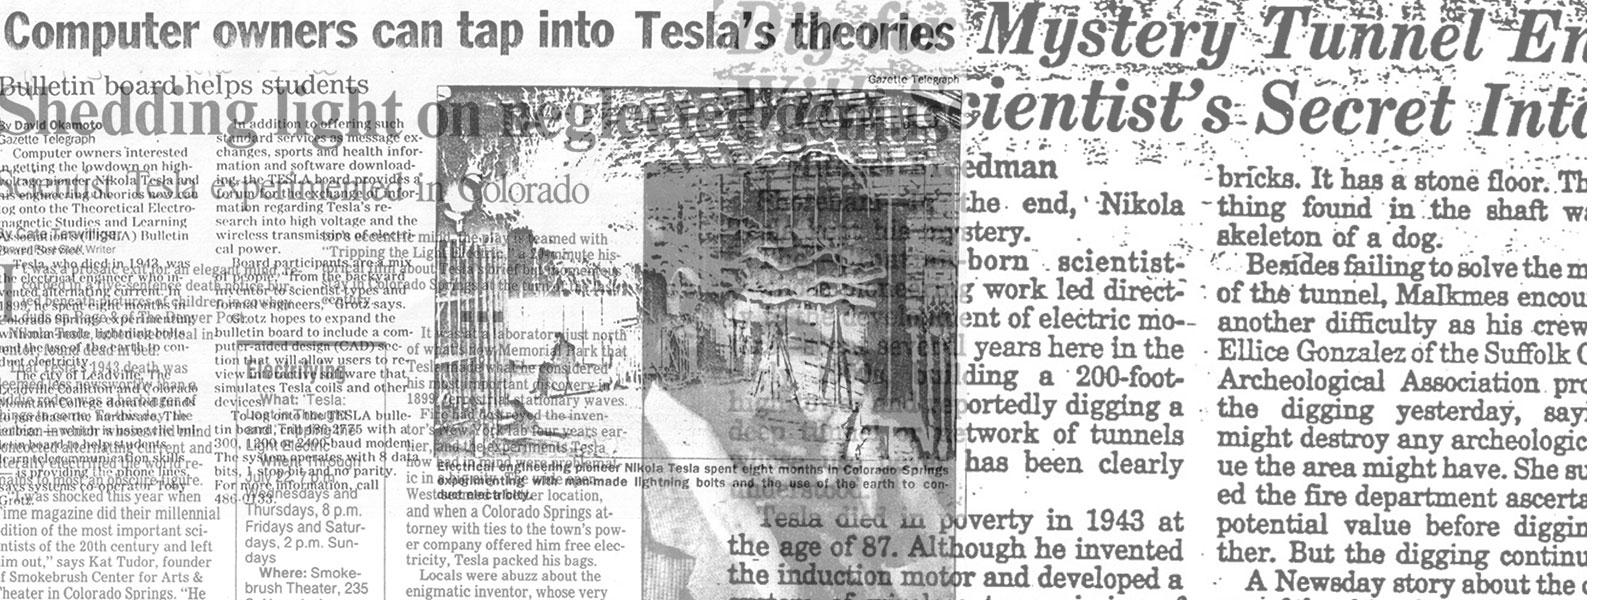 Newspaper and magazine articles related to Nikola Tesla